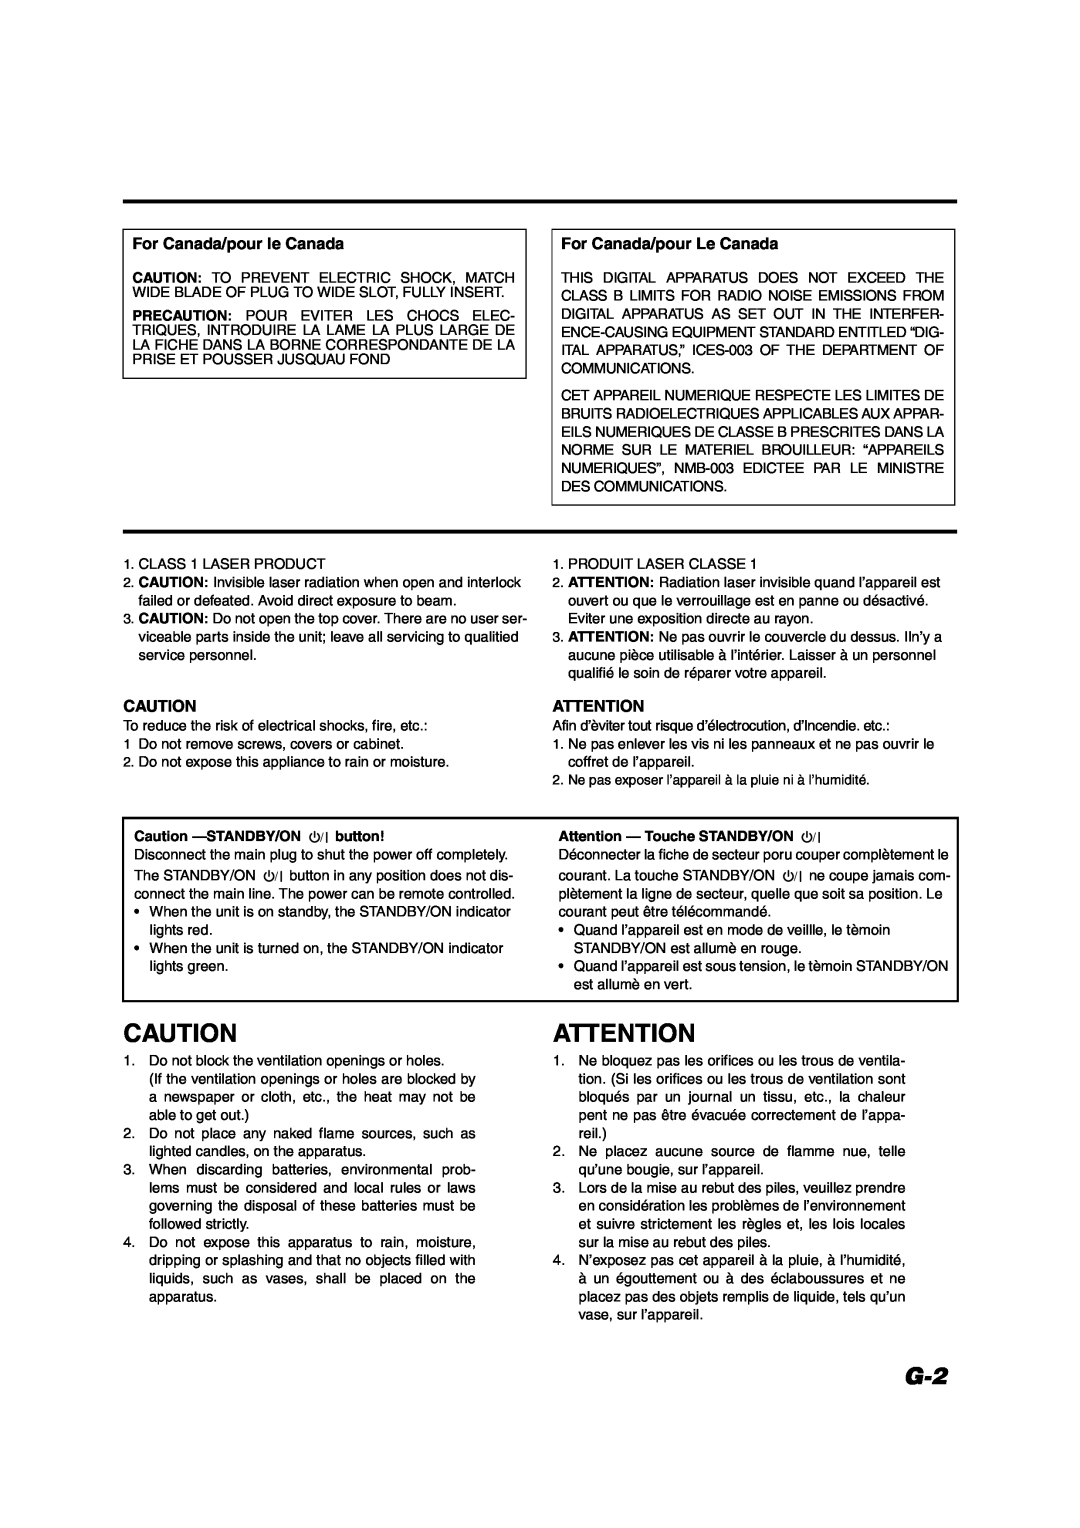 JVC FS-X1/FS-X3 manual For Canada/pour le Canada, For Canada/pour Le Canada, Caution -STANDBY/ON button 